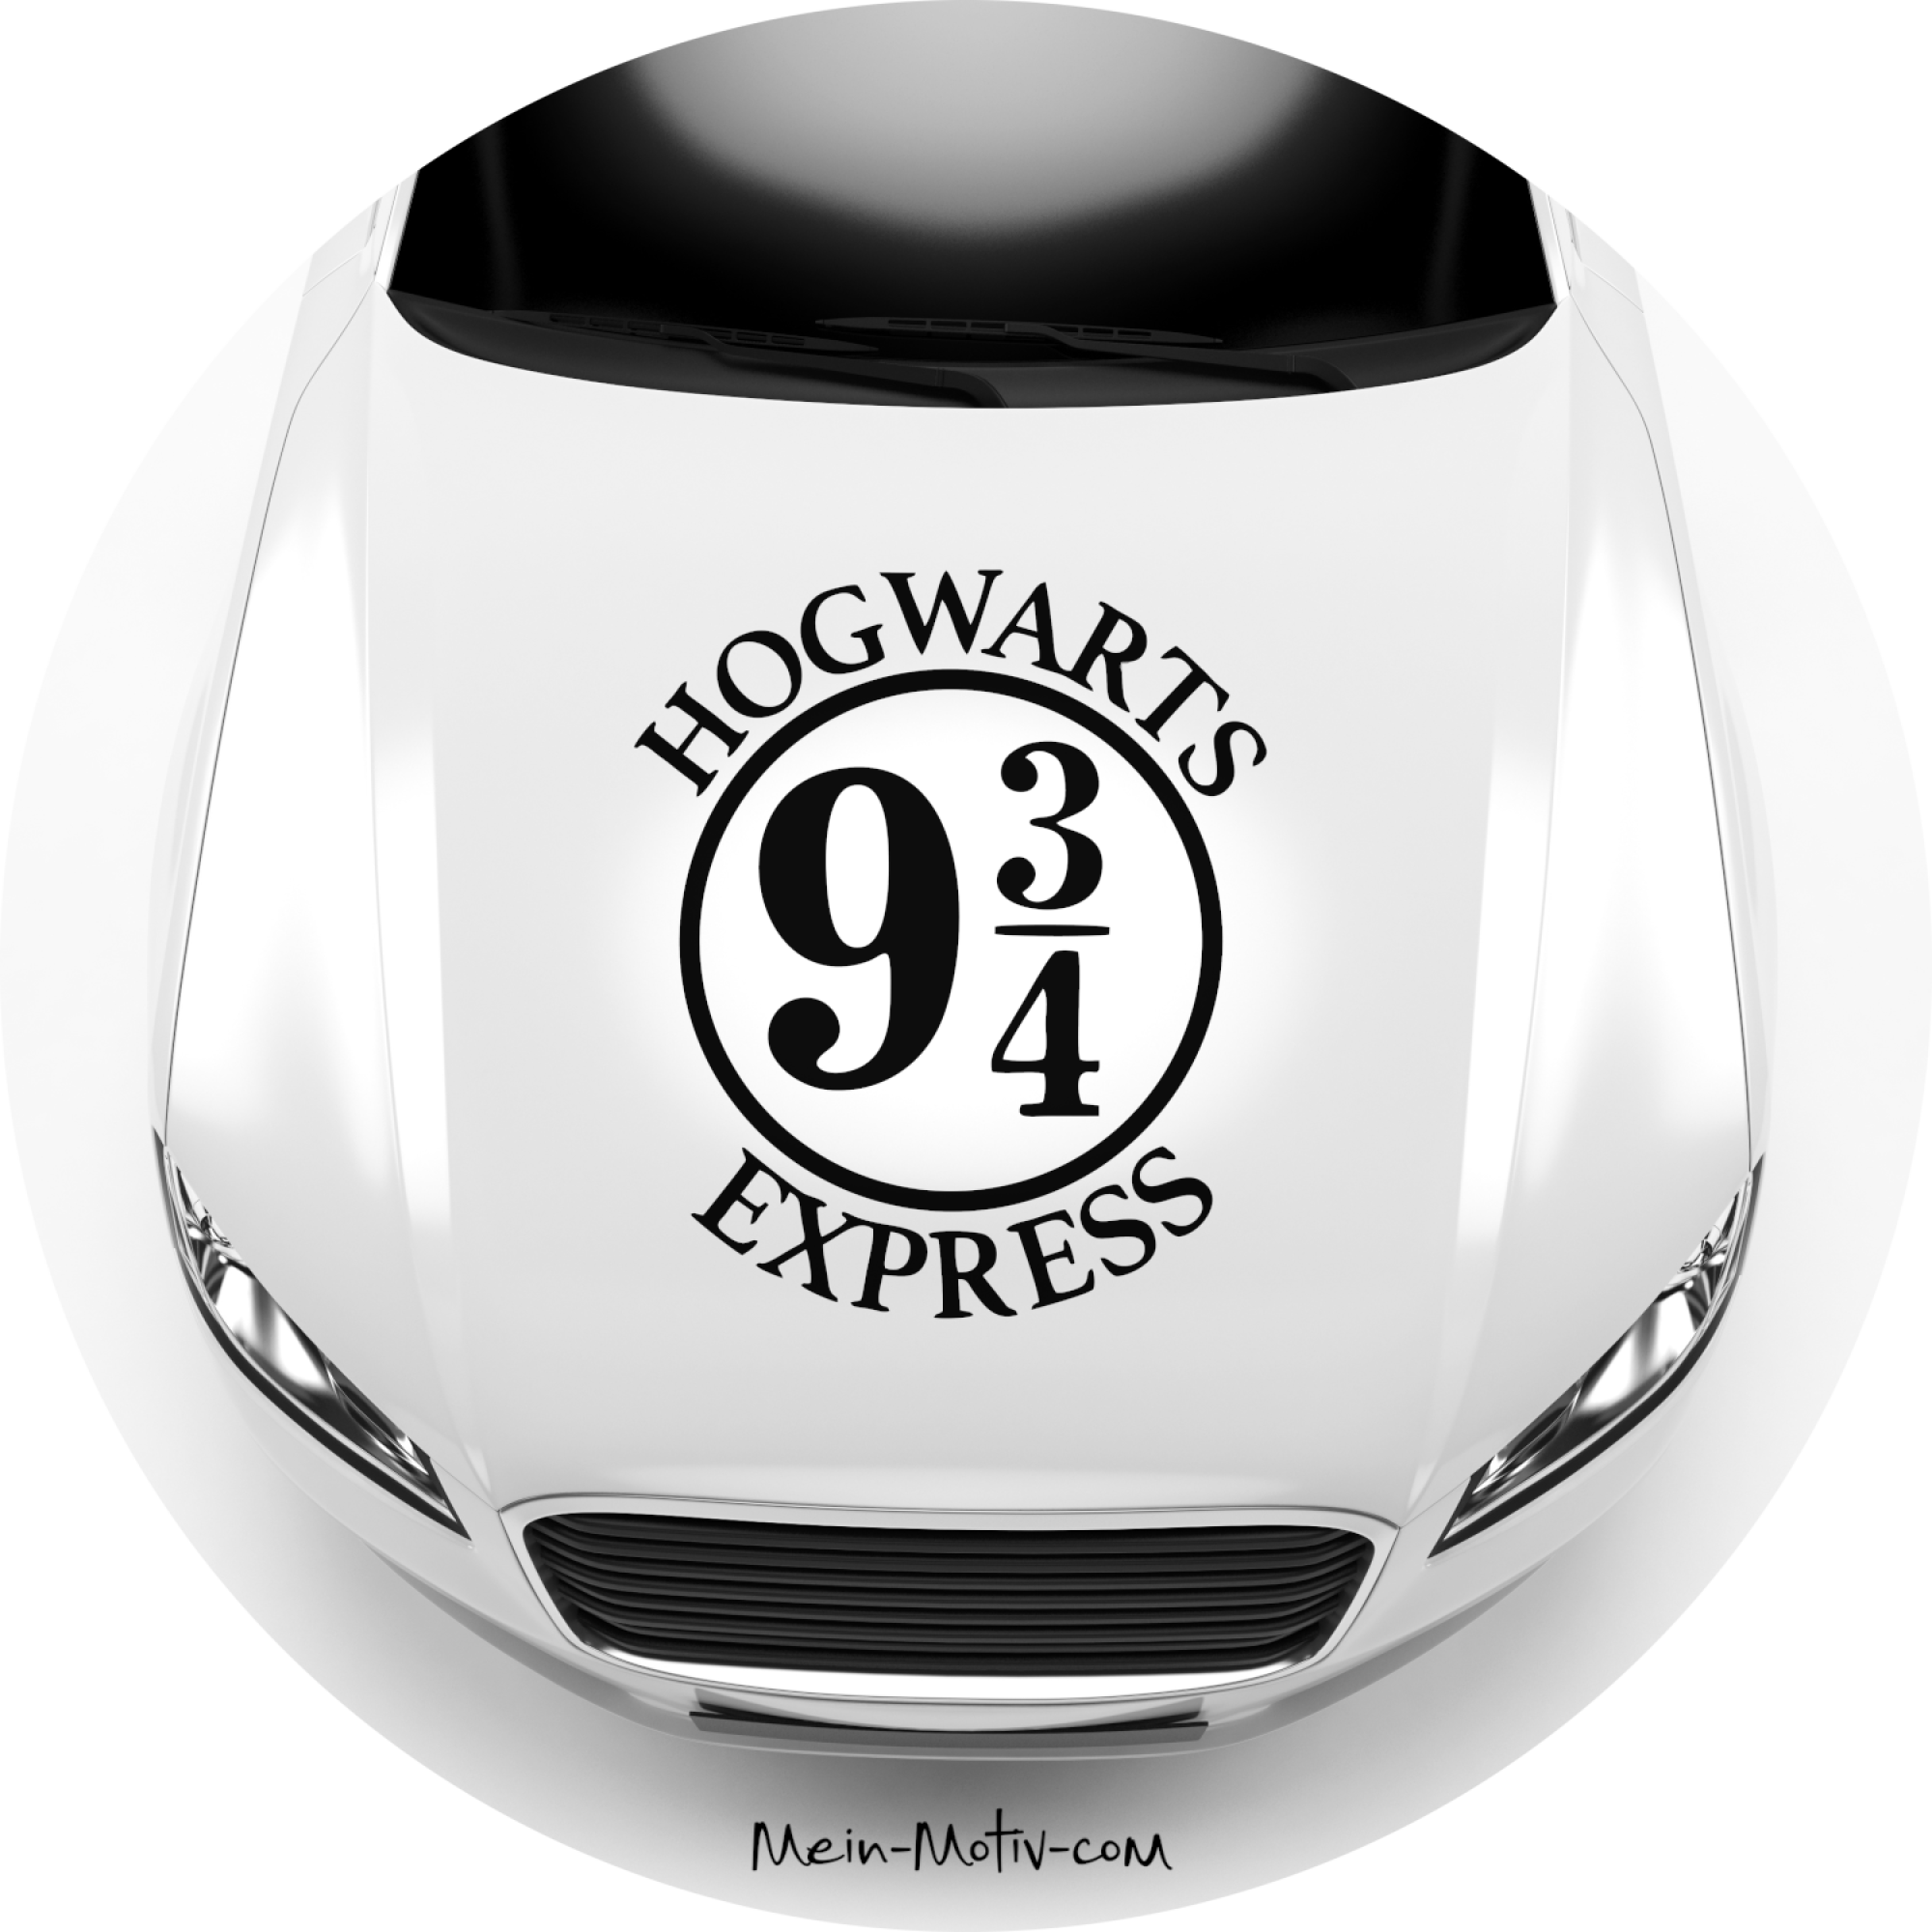 Aufkleber 46007 Harry P. Hogwarts Express 934